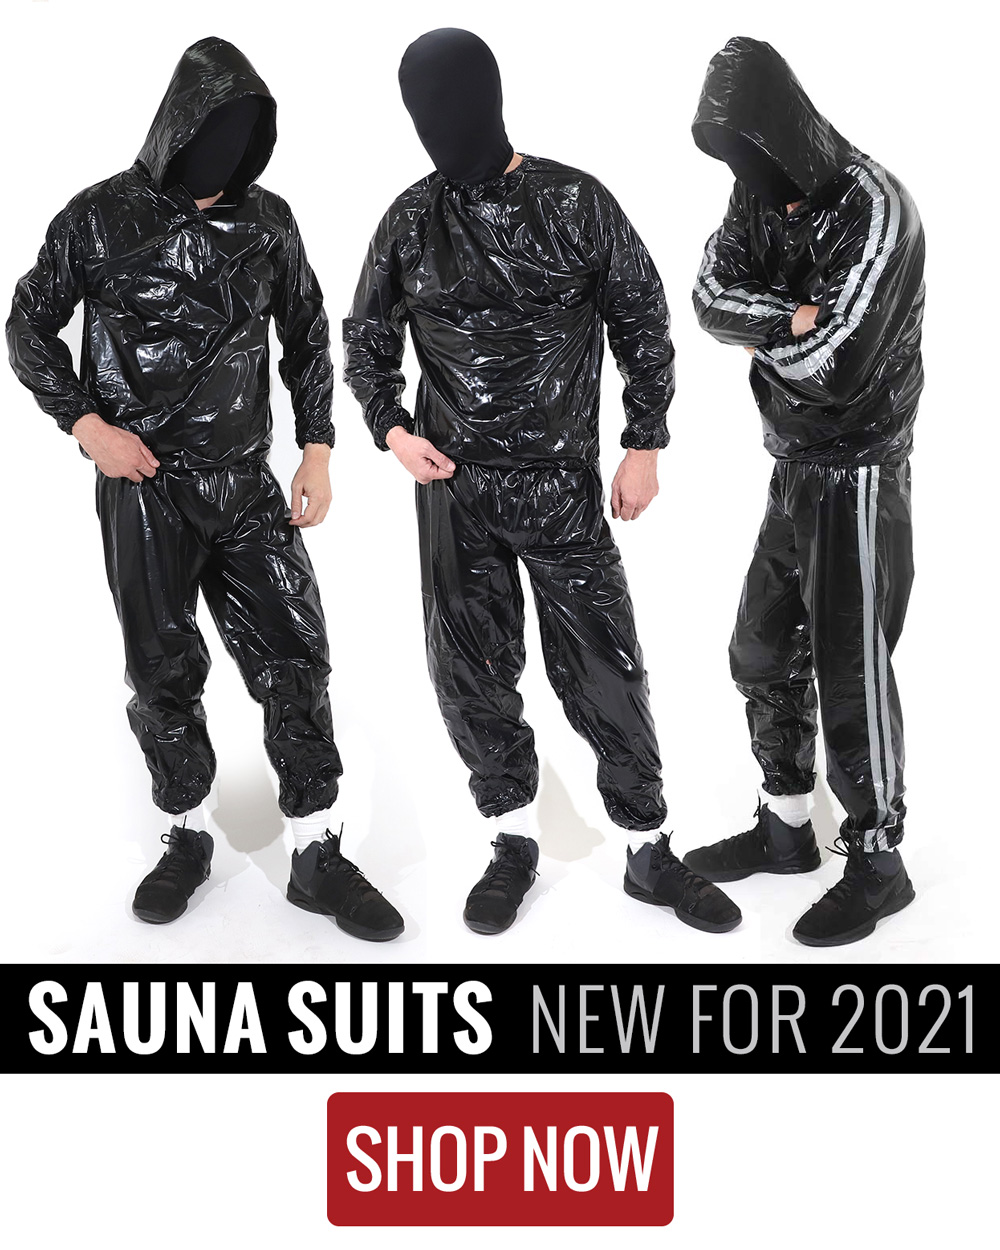 Sauna Suits from Asphalt Pilots